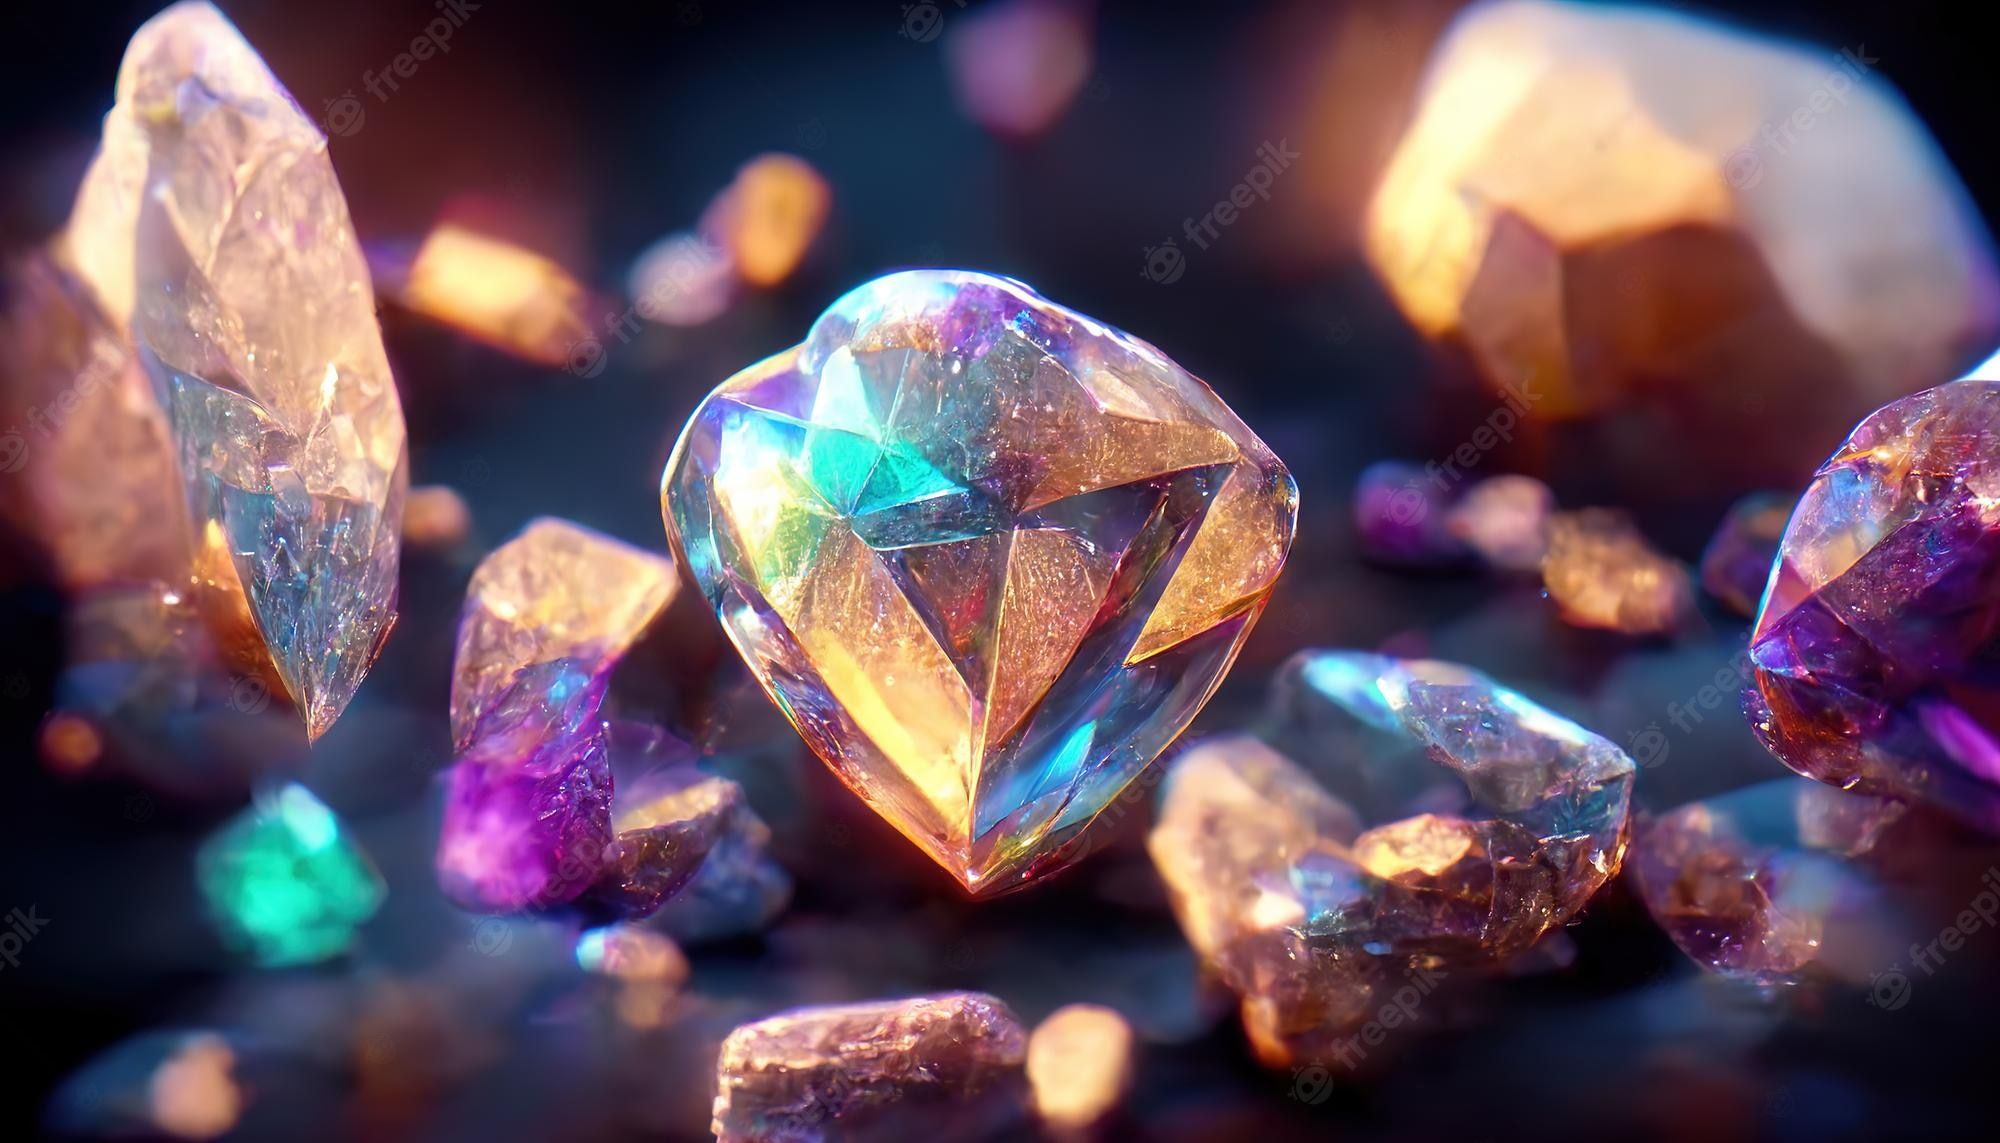 A diamond in the dark - Diamond